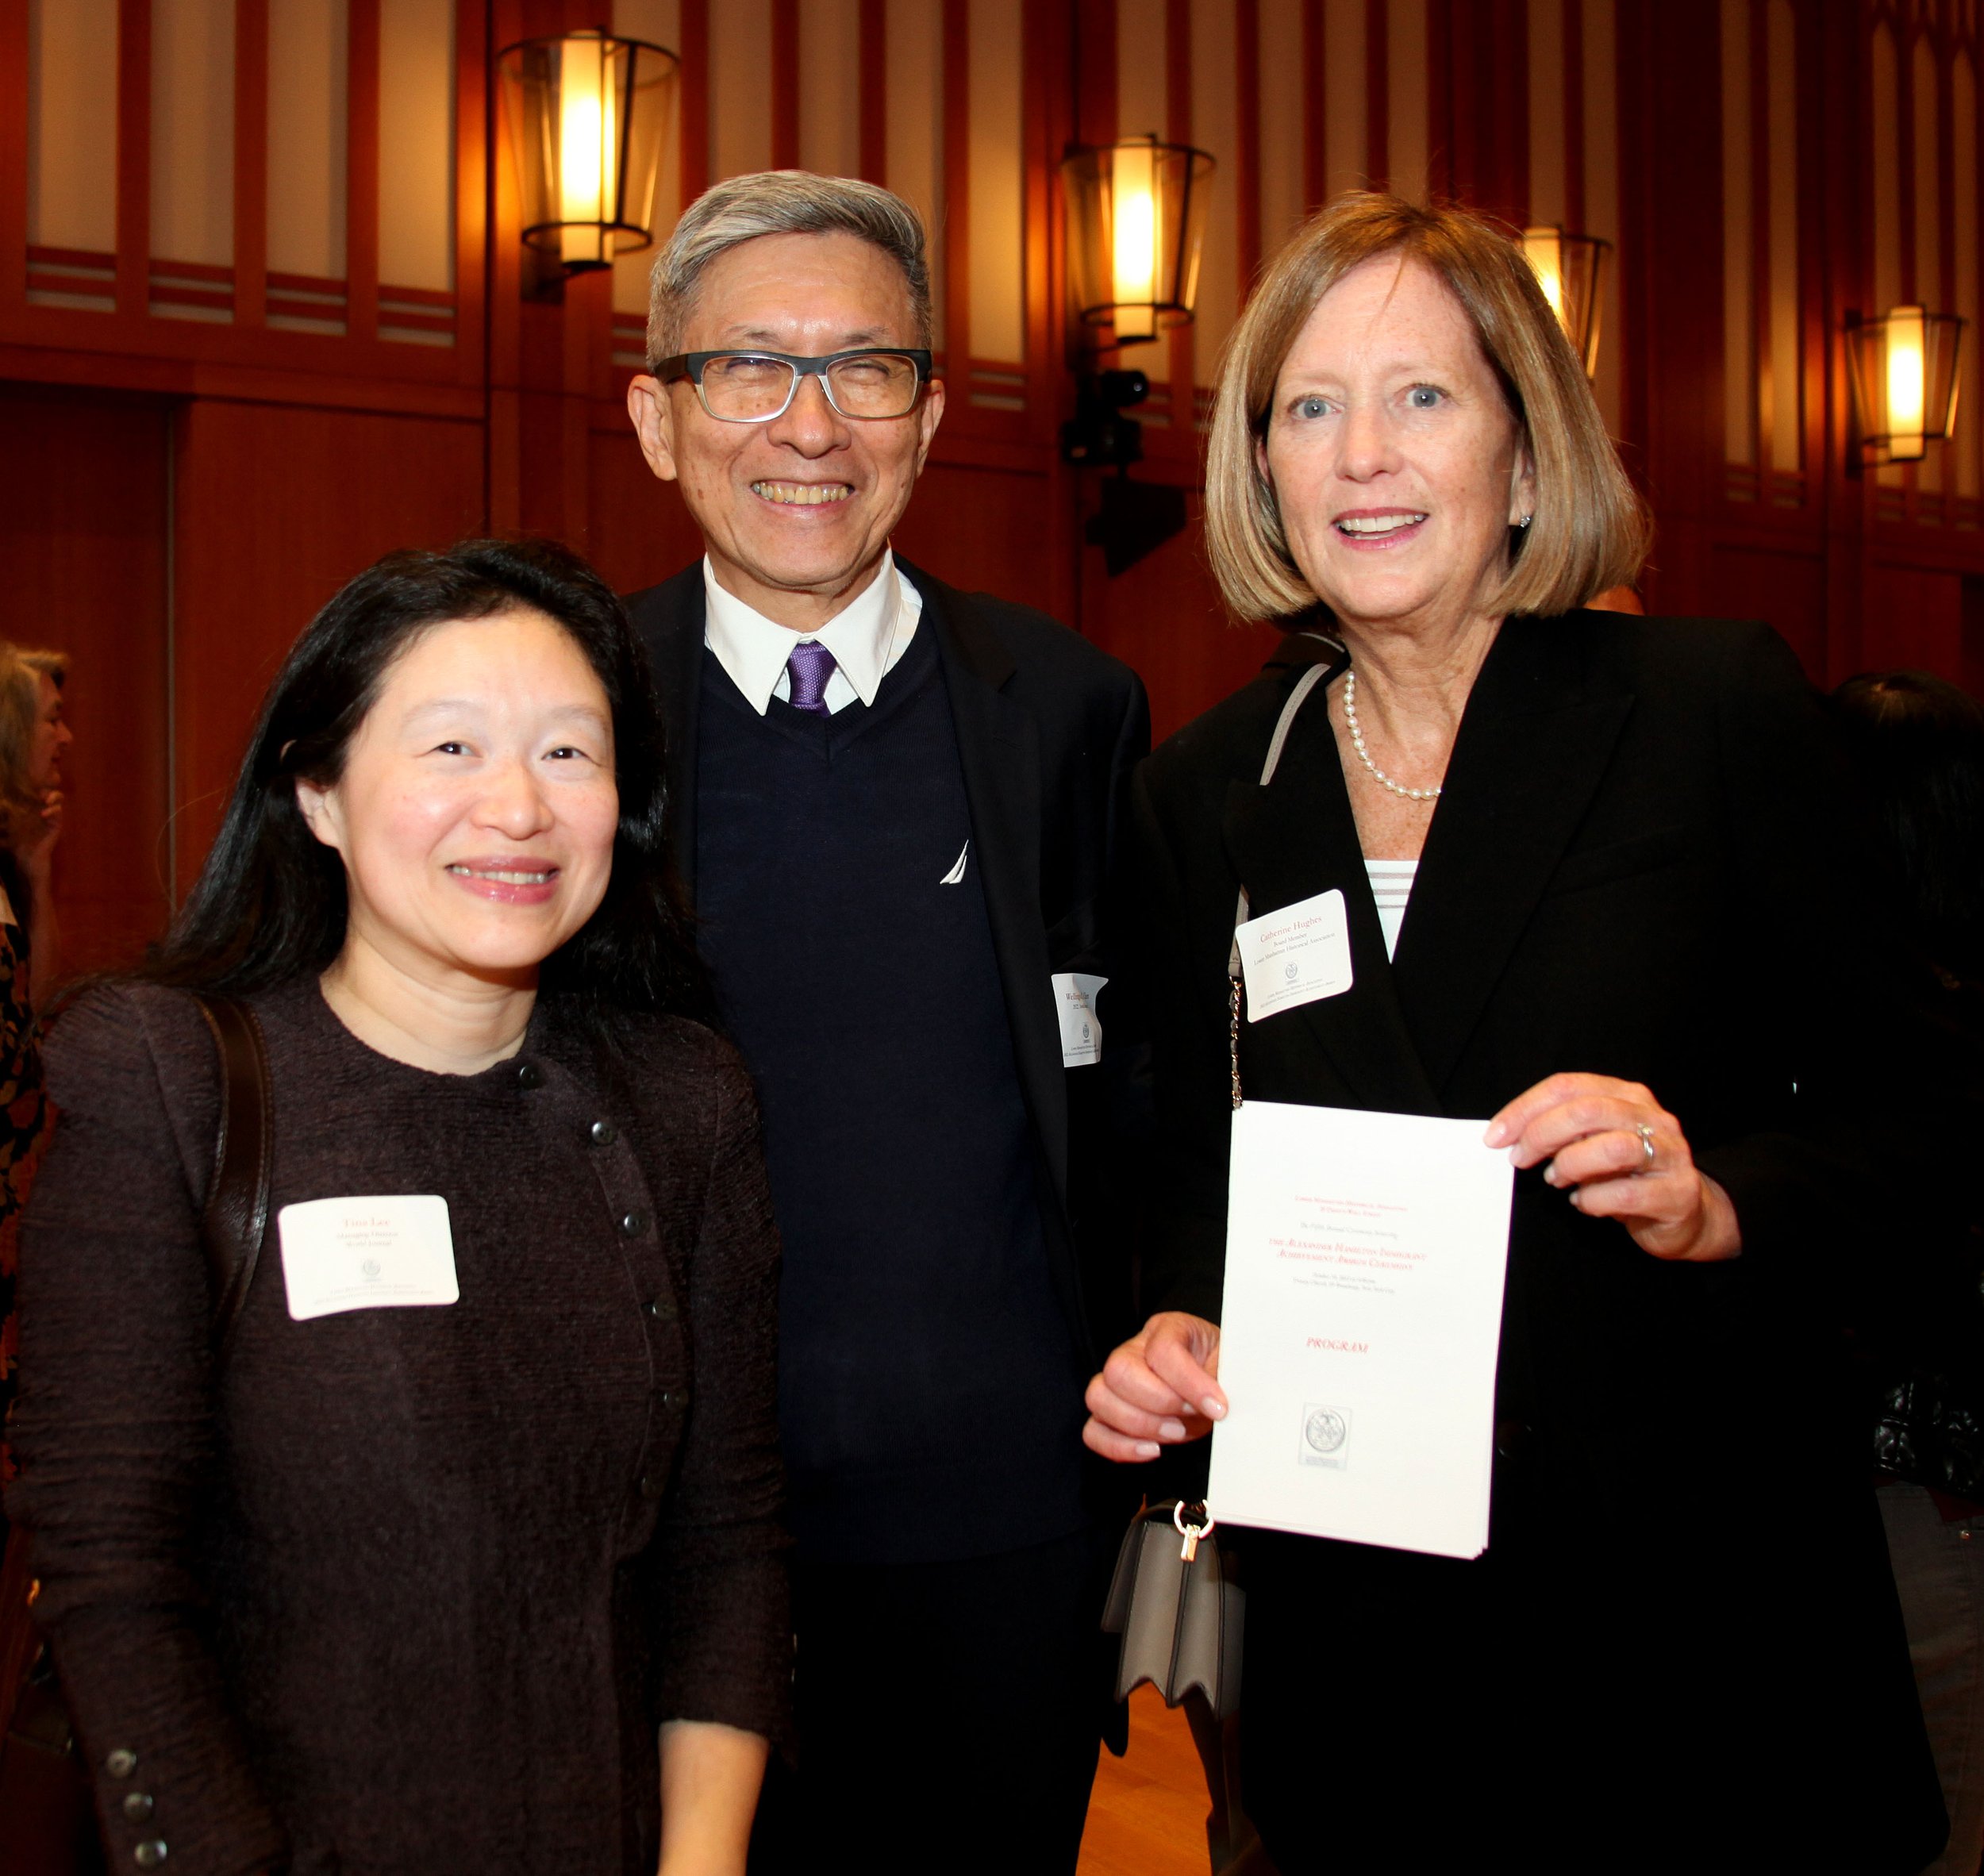   Tina Lee , Managing Director World Journal,  Wellington Z. Chen , Awardee, and  Catherine McVeigh Hughes  